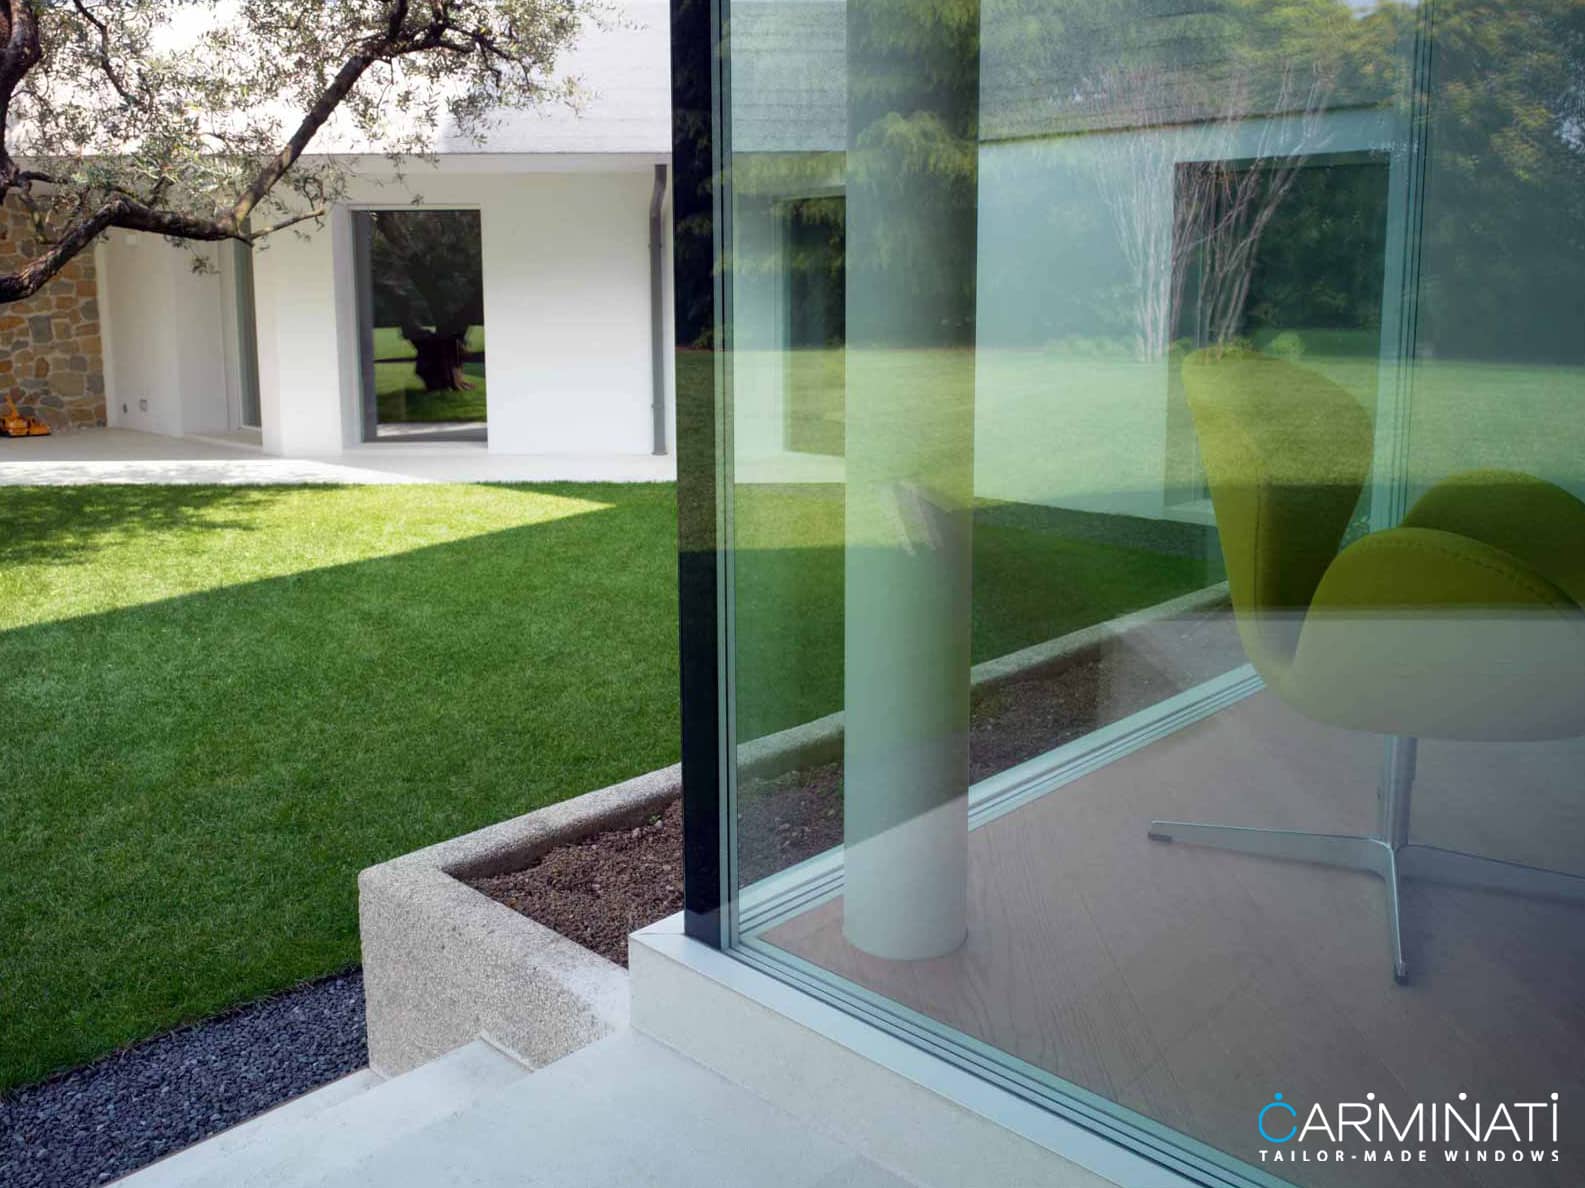 Natural lights fills this contemporary home through an expansive minimal frame glass corner meet window